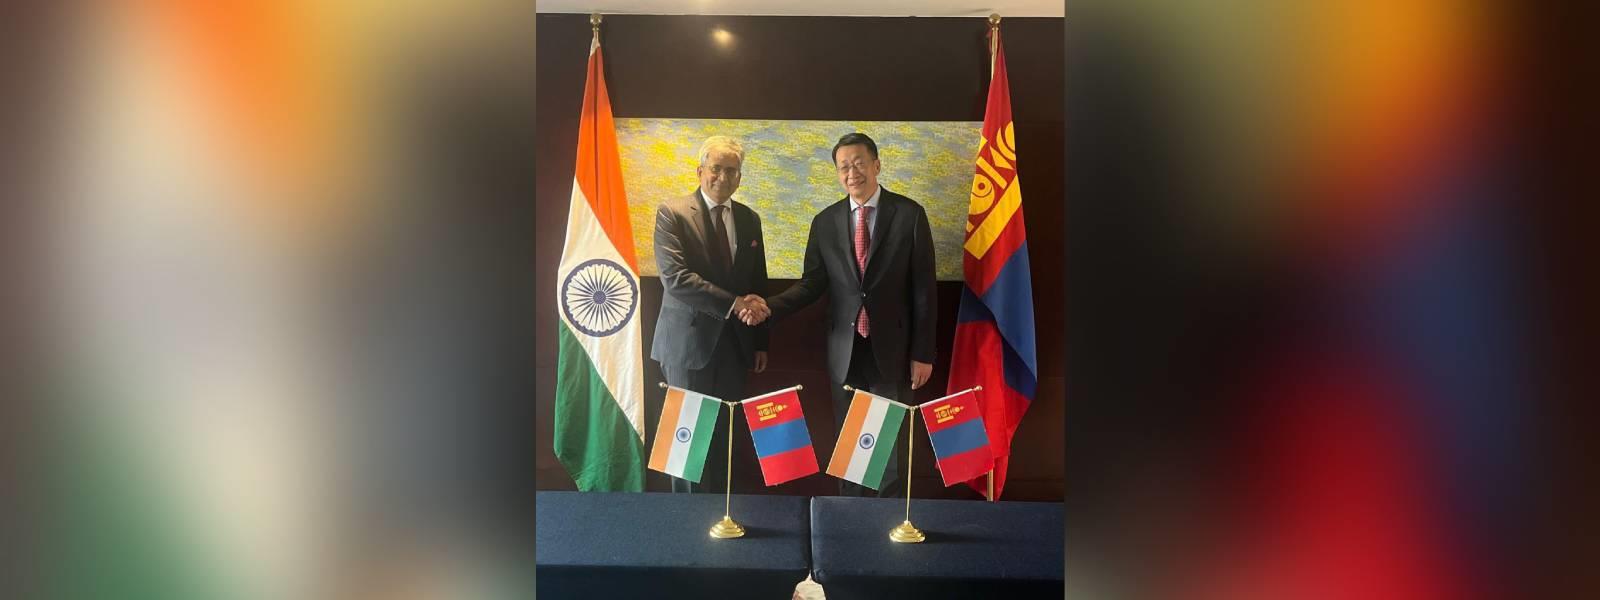 Secretary (East) Shri Saurabh Kumar met Minister of Education and Science of Mongolia, H.E. Mr. Luvsantseren Enkh-Amgalan in Ulaanbaatar